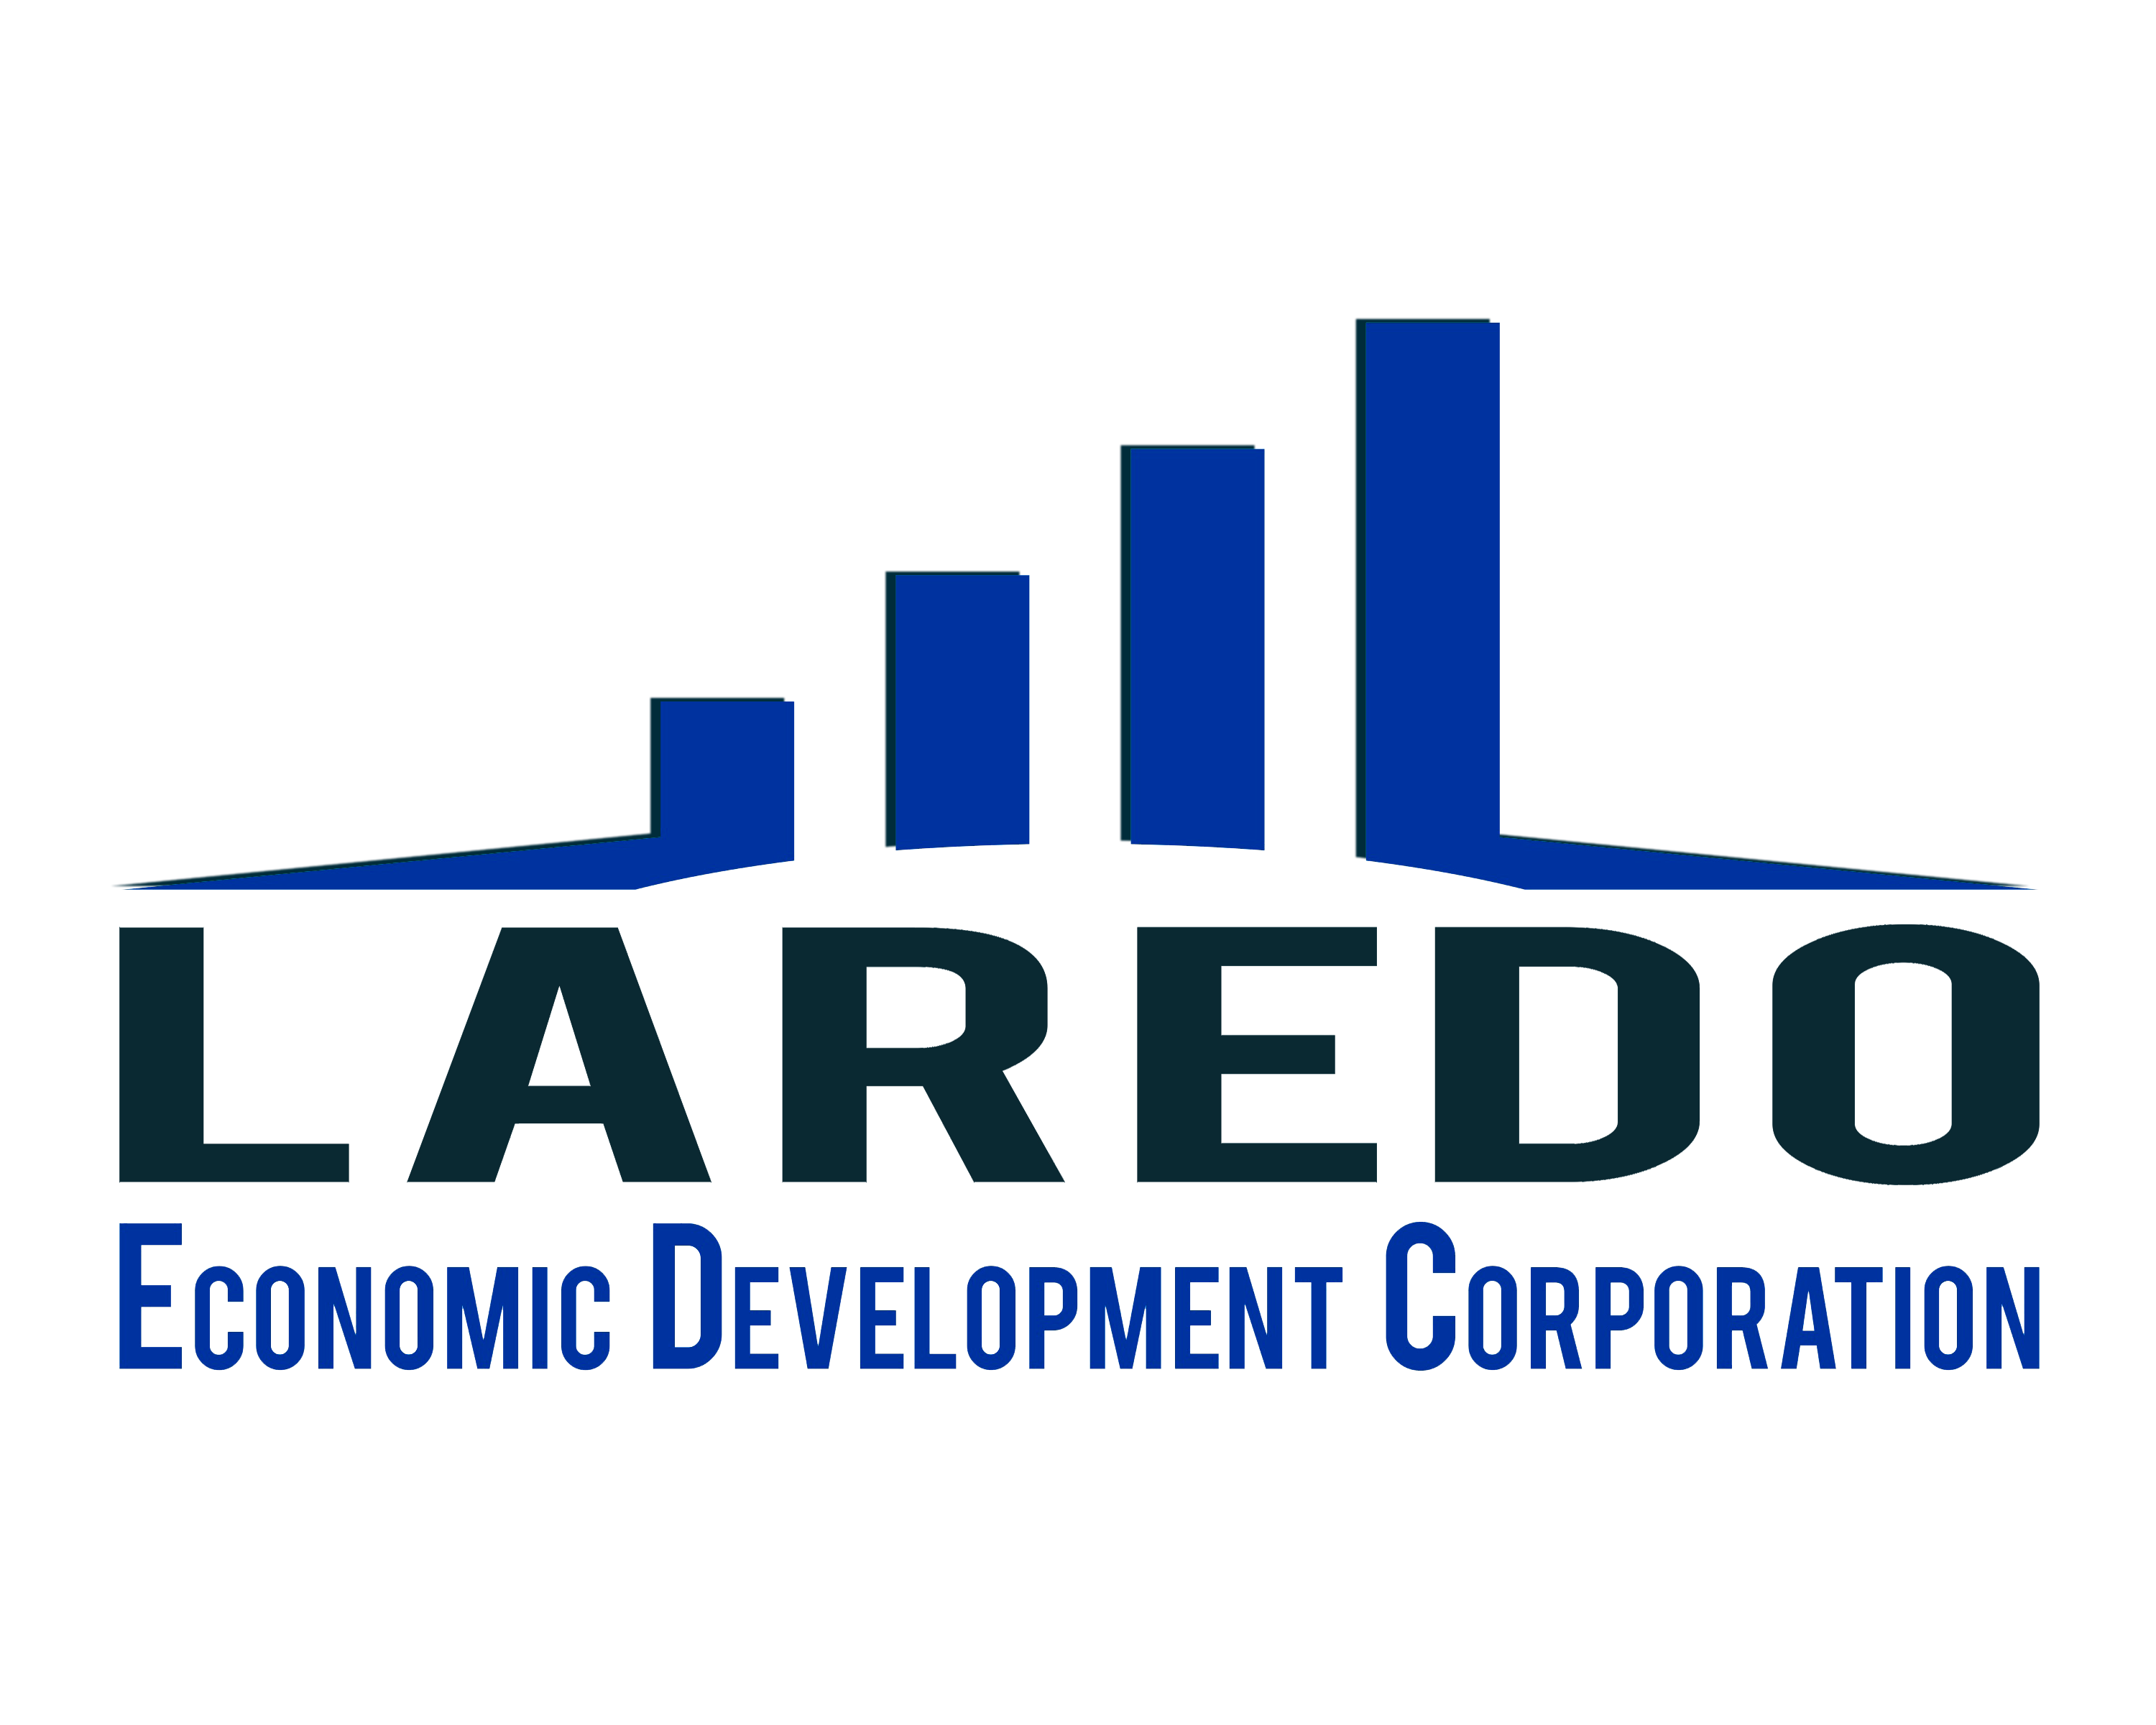 ledc-logo-1234-1